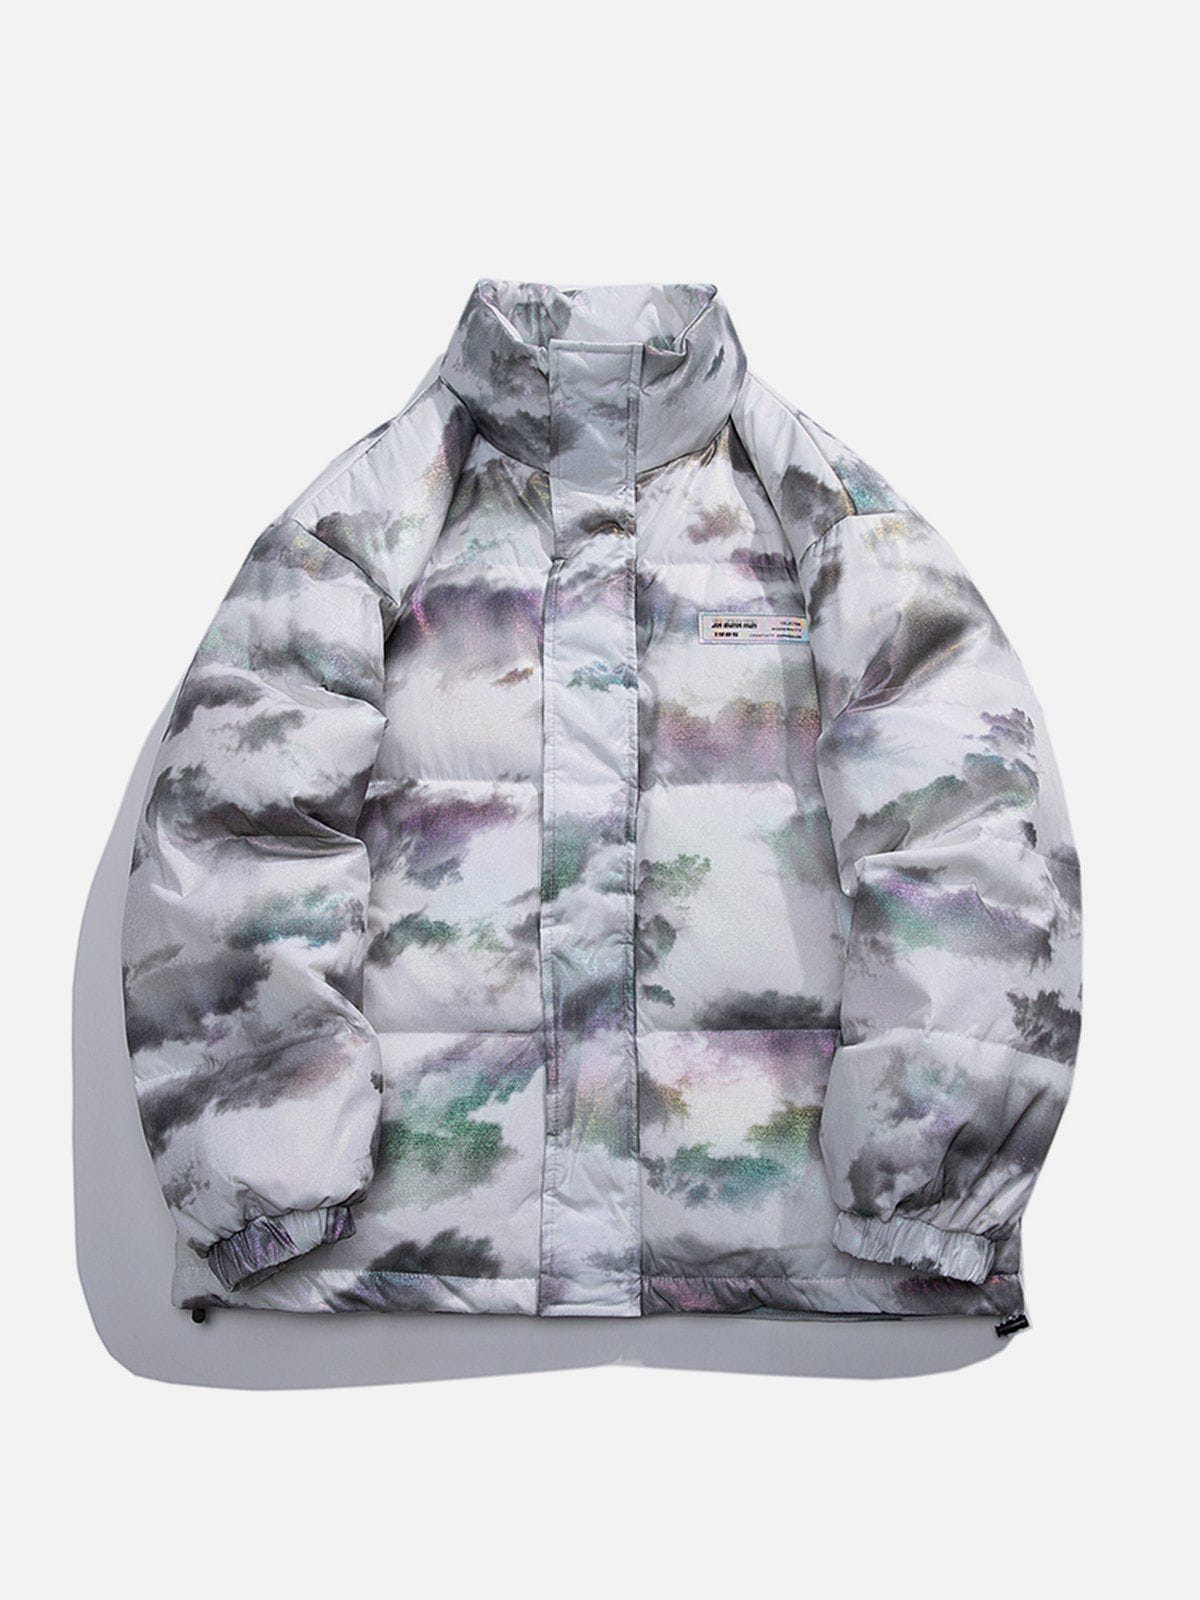 Sneakerland™ - Tie Dye Camouflage Winter Coat